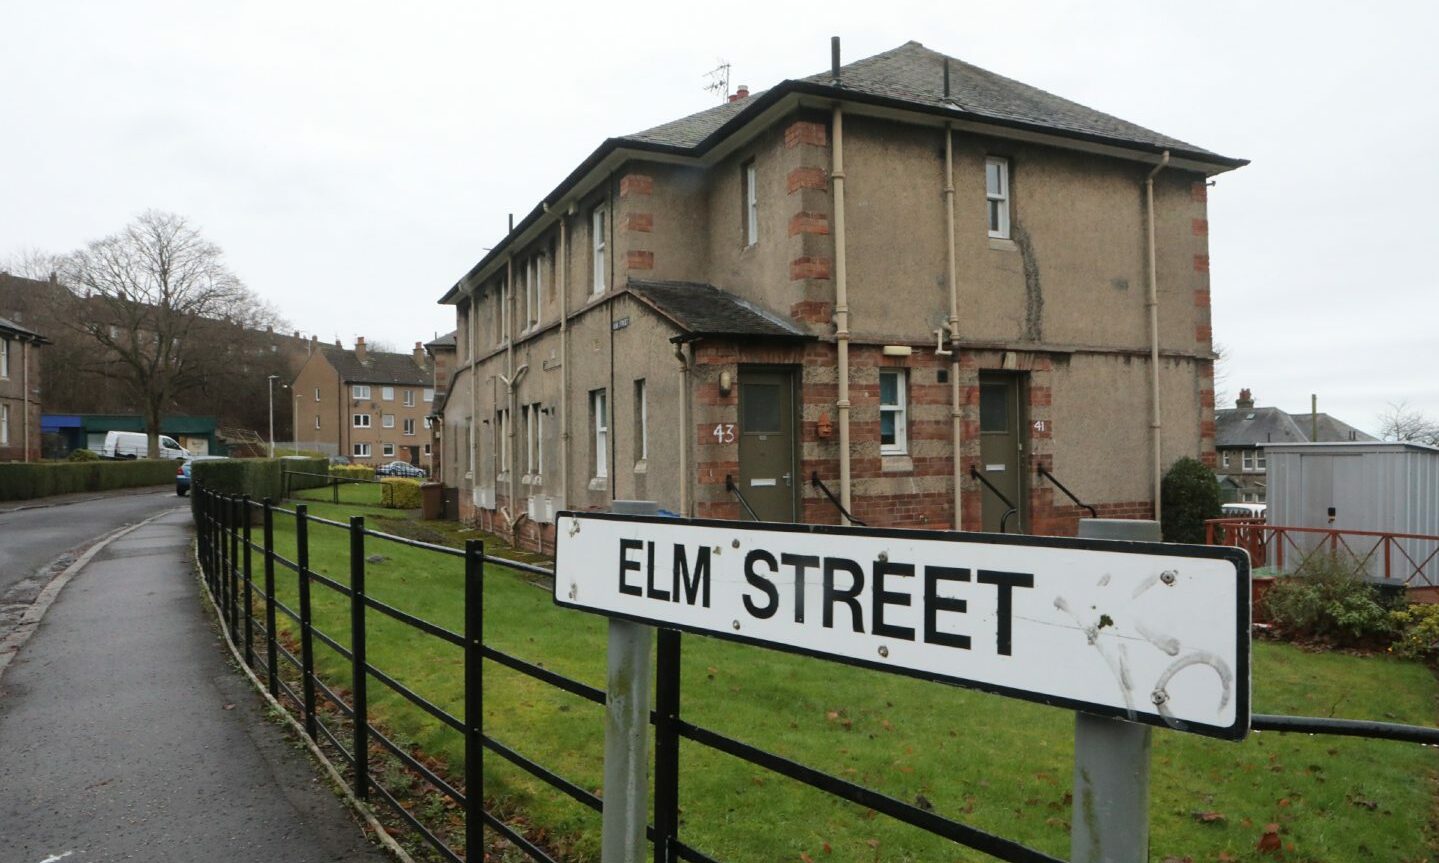 Elm Street on the Logie Estate.